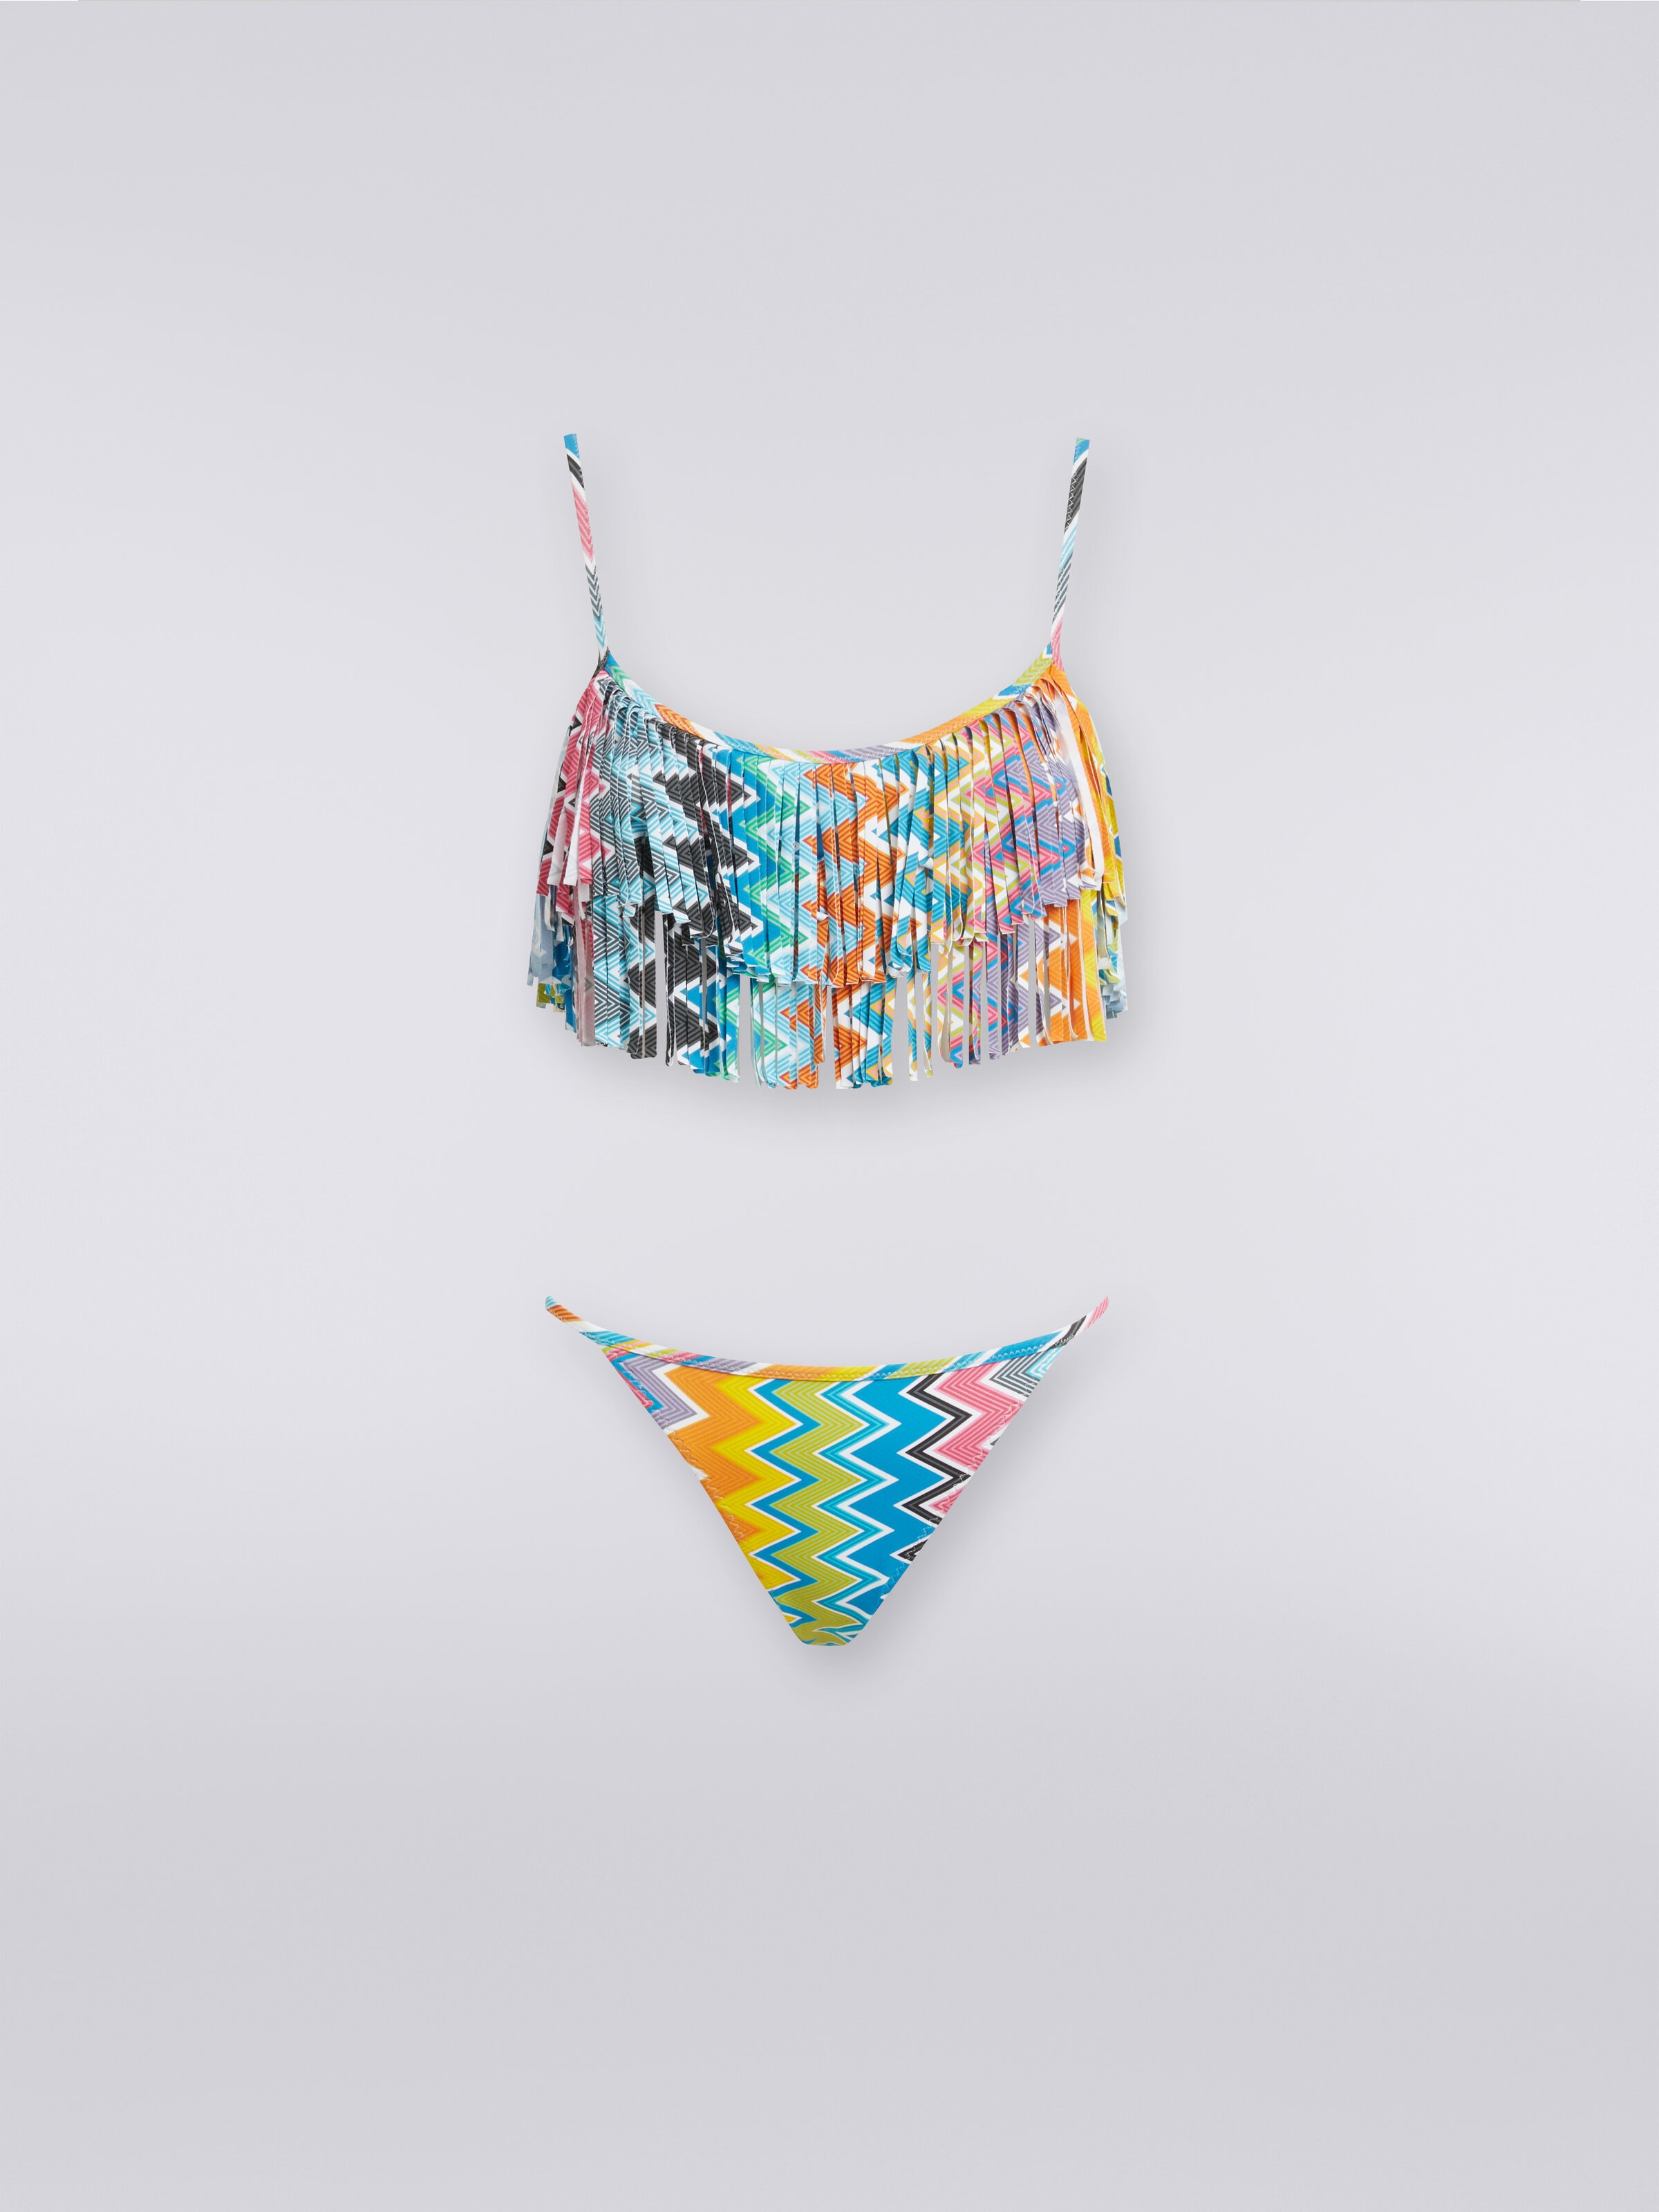 Printed stretch fabric bikini with fringed top, Multicoloured  - 0